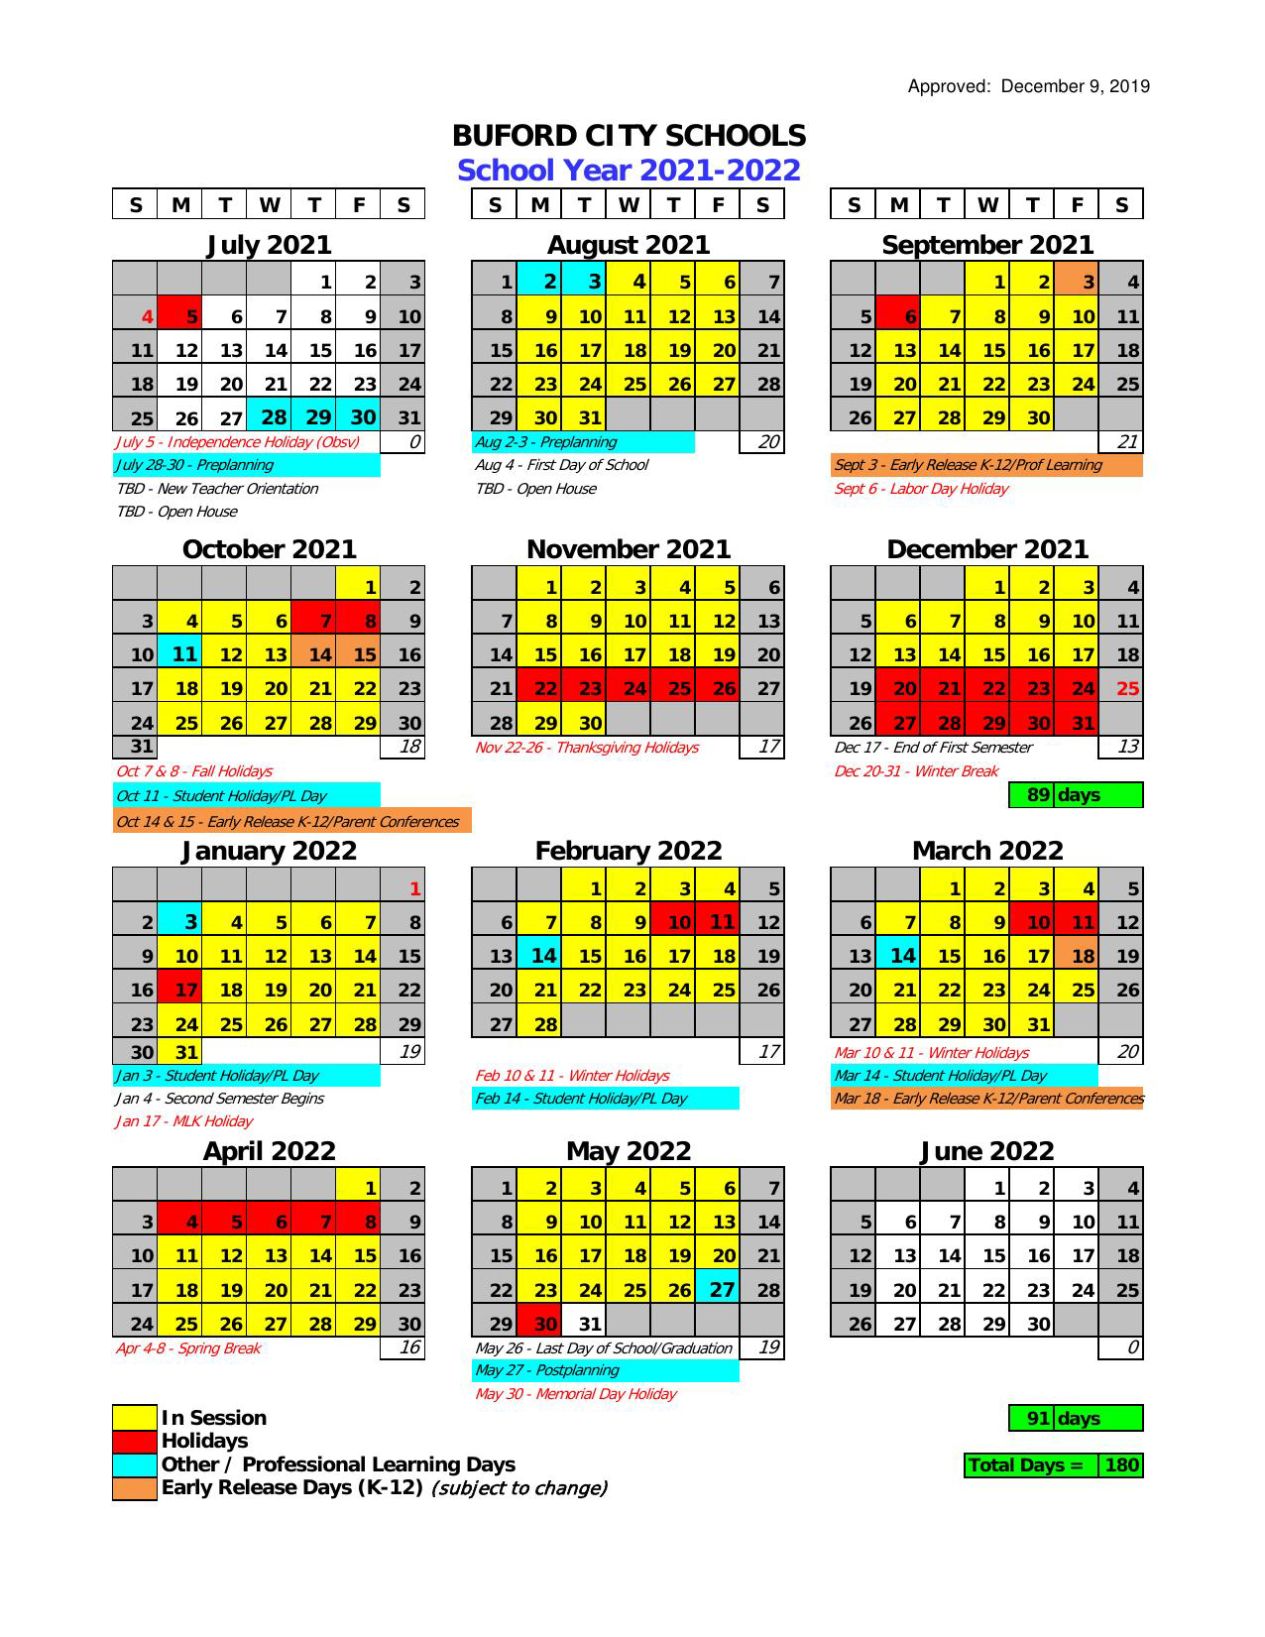 Gwinnett County School Calendar 2019 2020